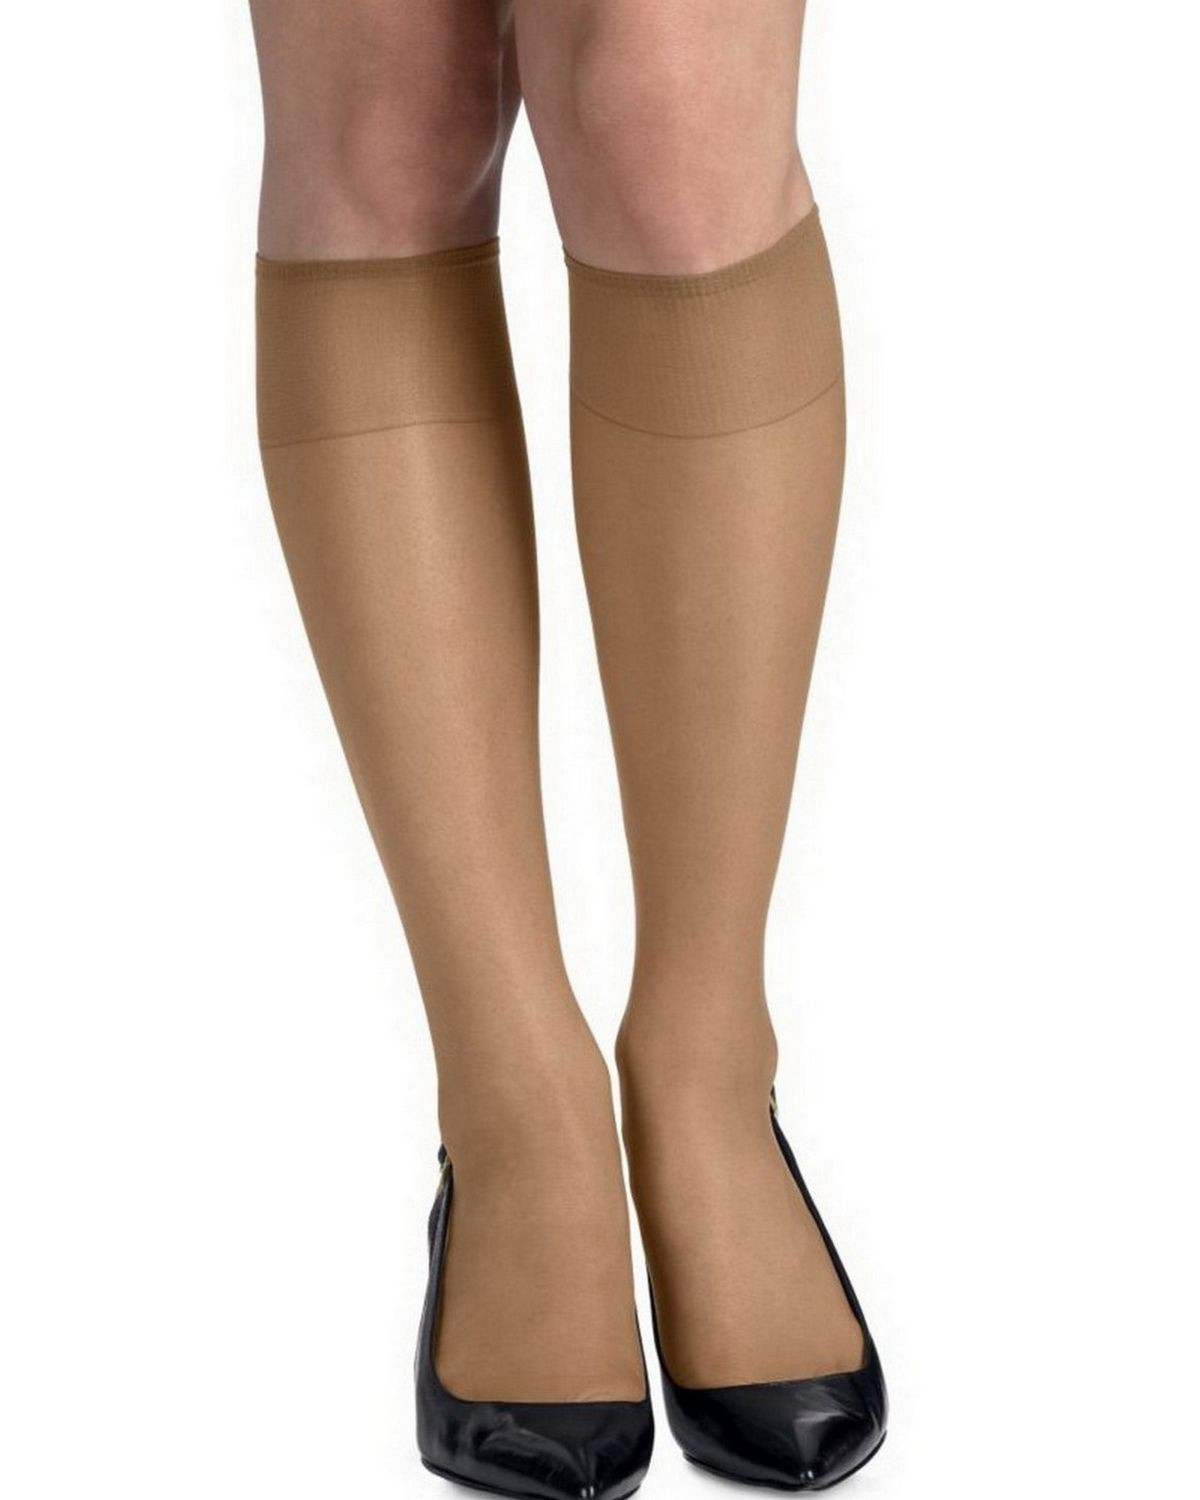 Hanes 775 Women's Silk Reflections Silky Sheer Knee Highs Reinforced Toe 2-Pack - Nude - One Size #silk